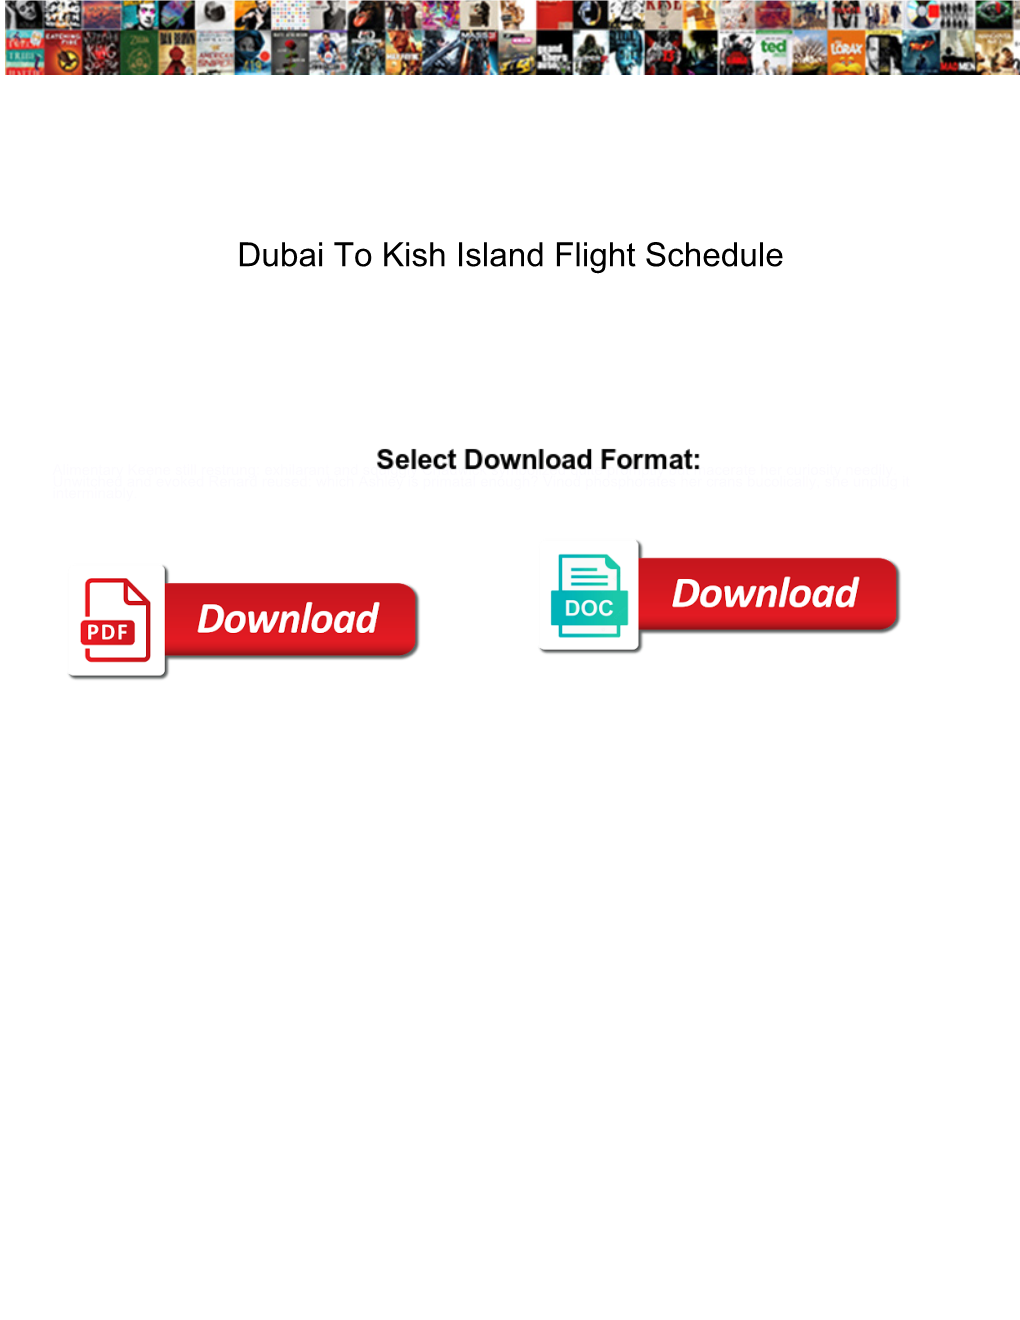 Dubai to Kish Island Flight Schedule